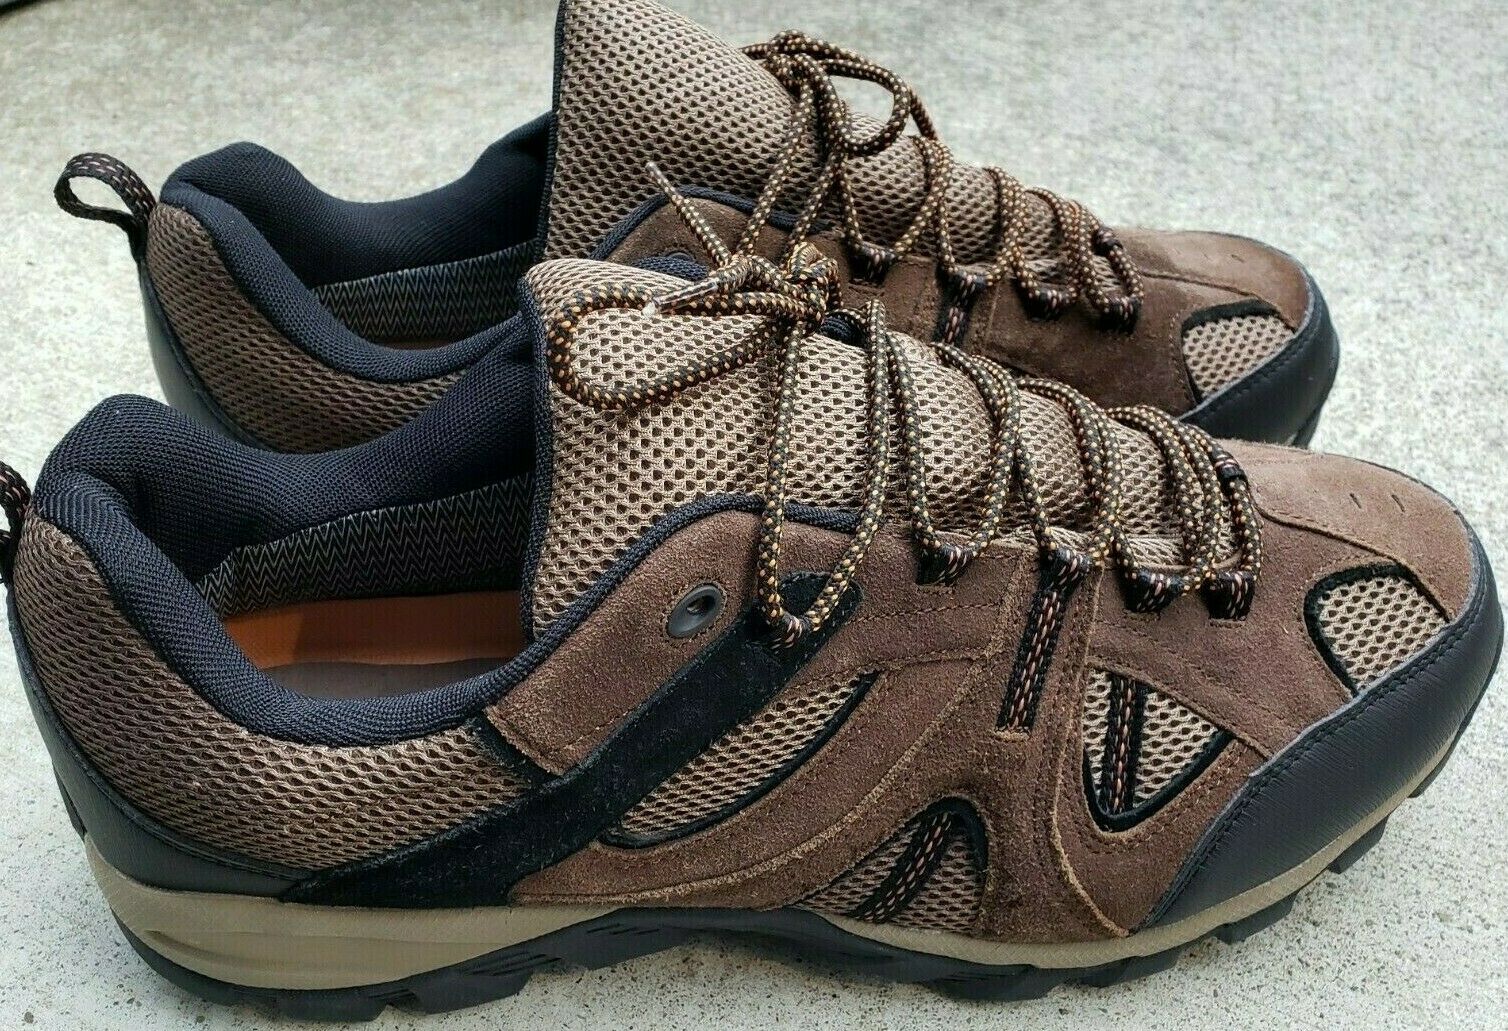 Boulder Creek Trading Co. Leather Walking/Work Shoes Size 15EW